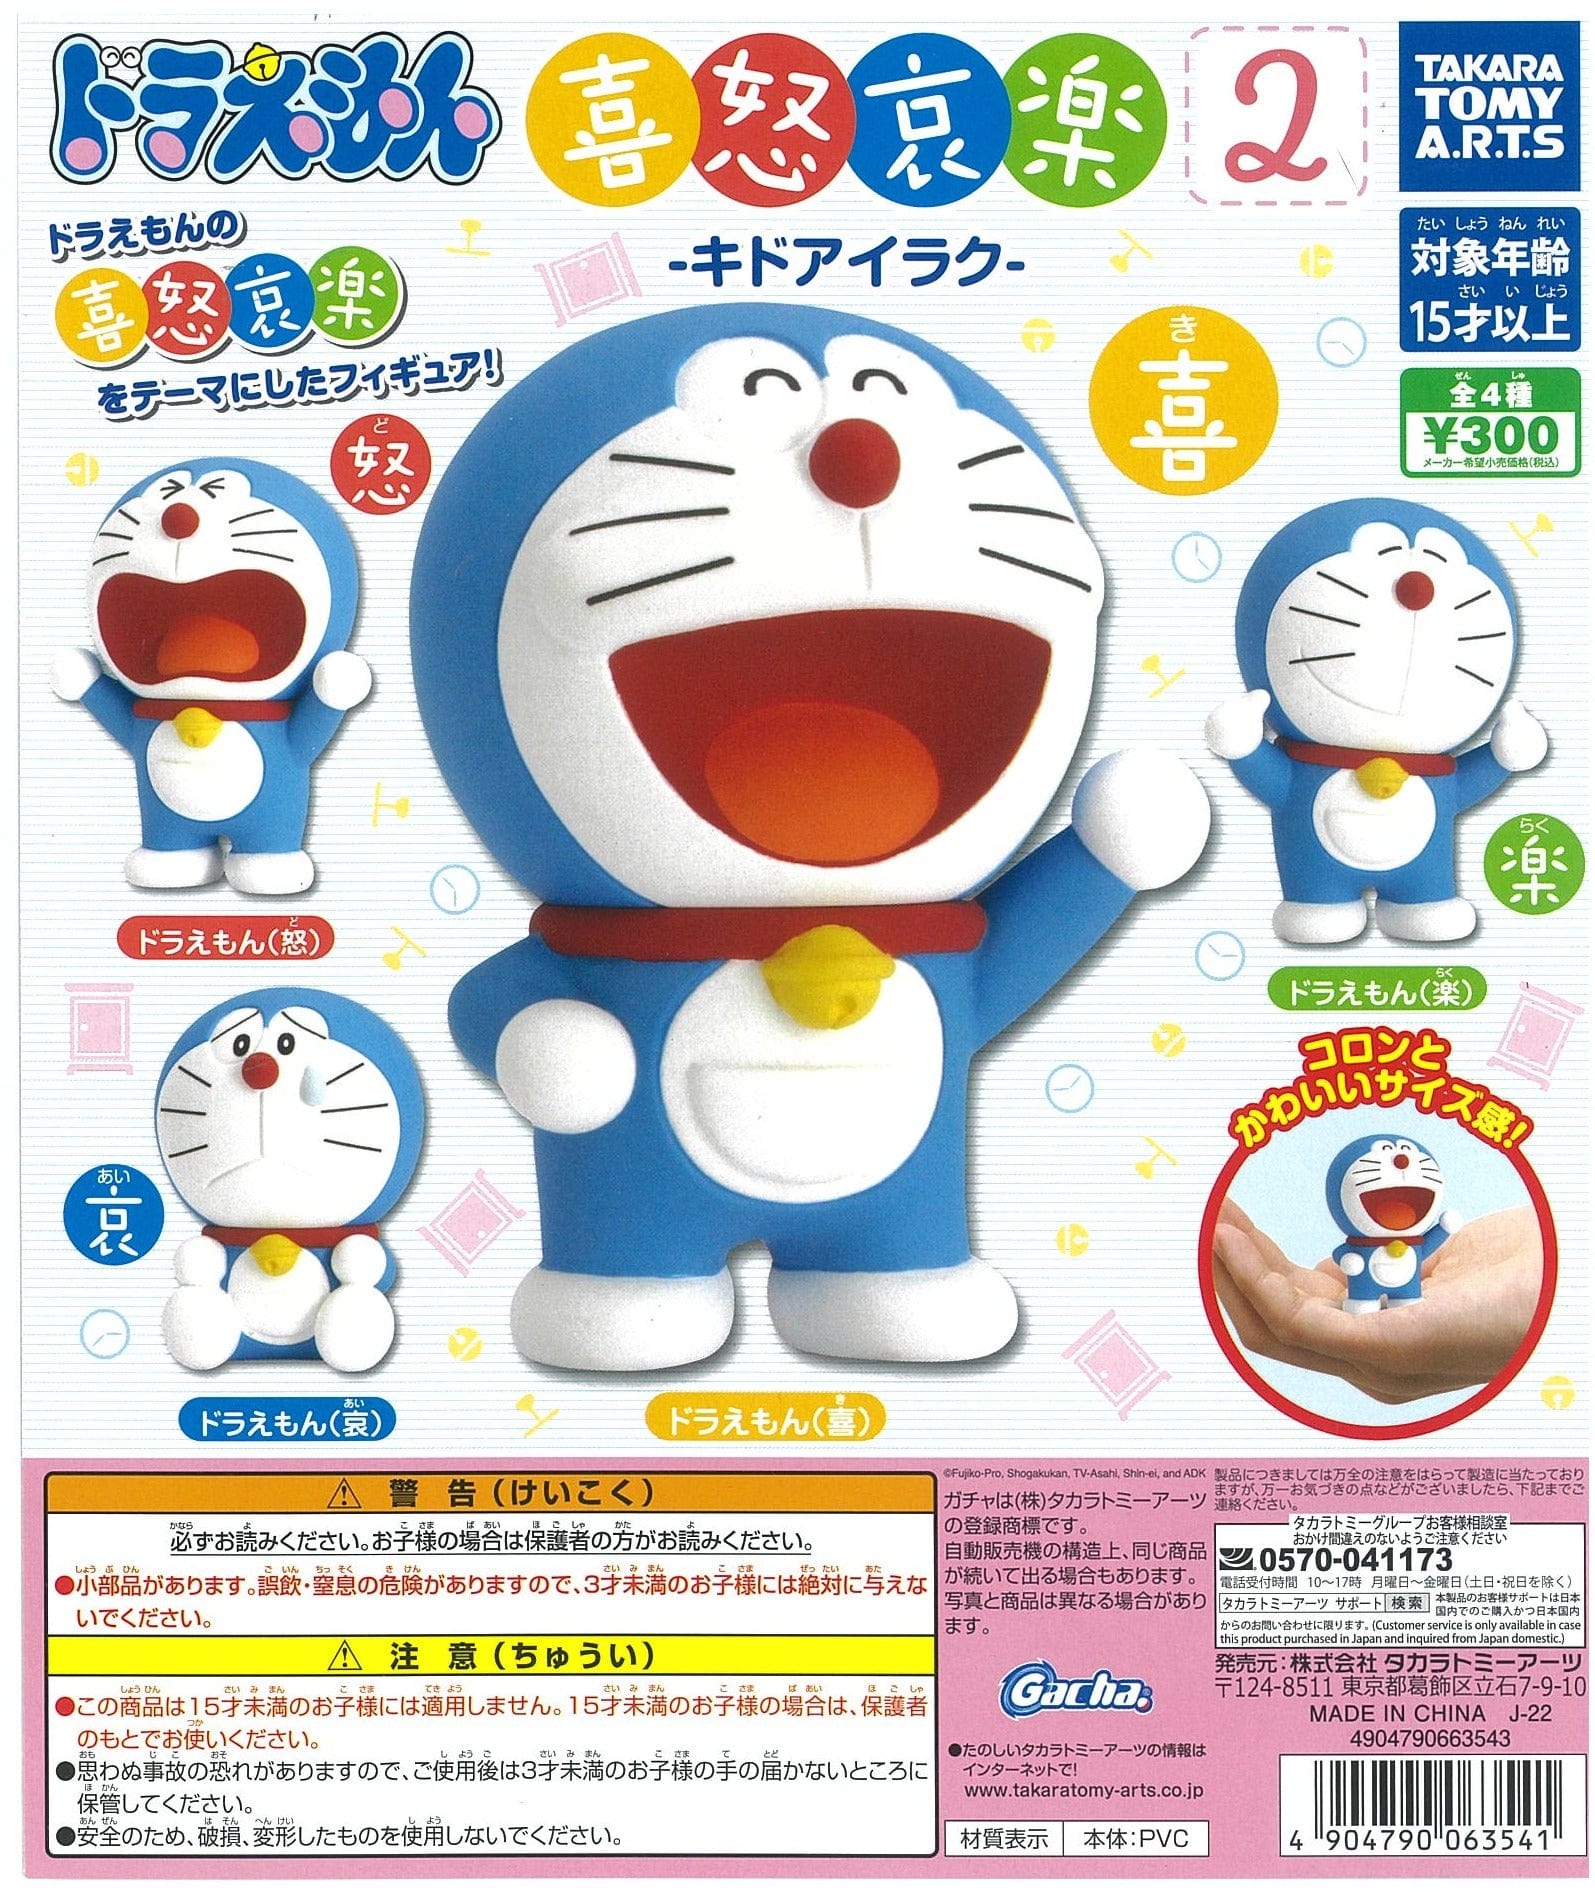 TAKARA TOMY ARTS CP2007 Doraemon Emoons -Kidoairaku- 2